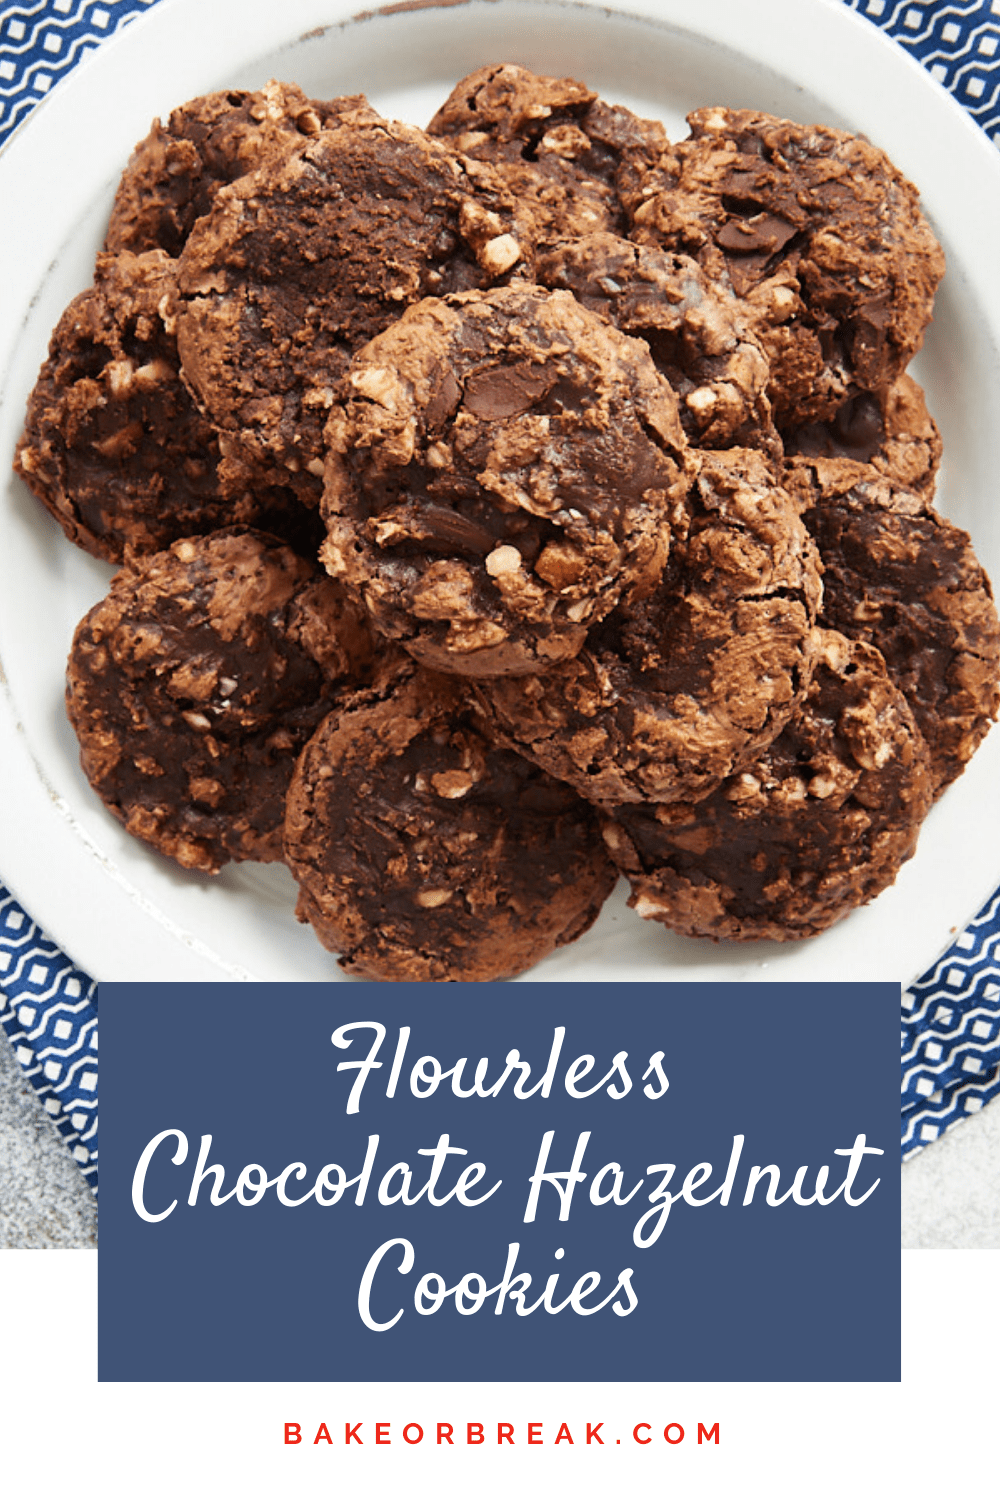 Flourless Chocolate Hazelnut Cookies bakeorbreak.com